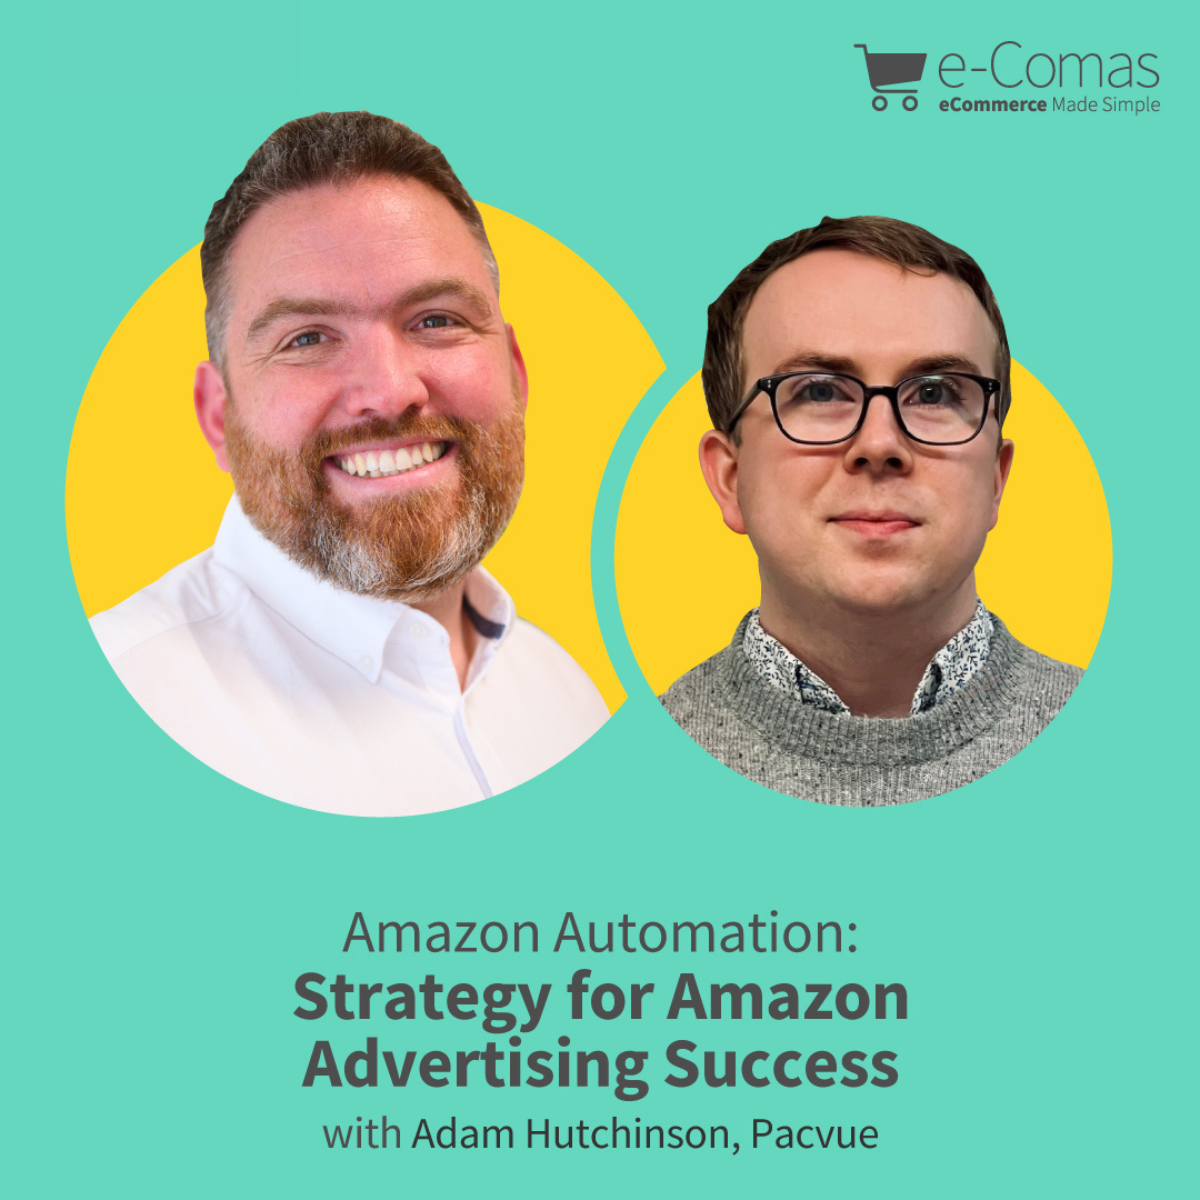 Amazon Automation webinar